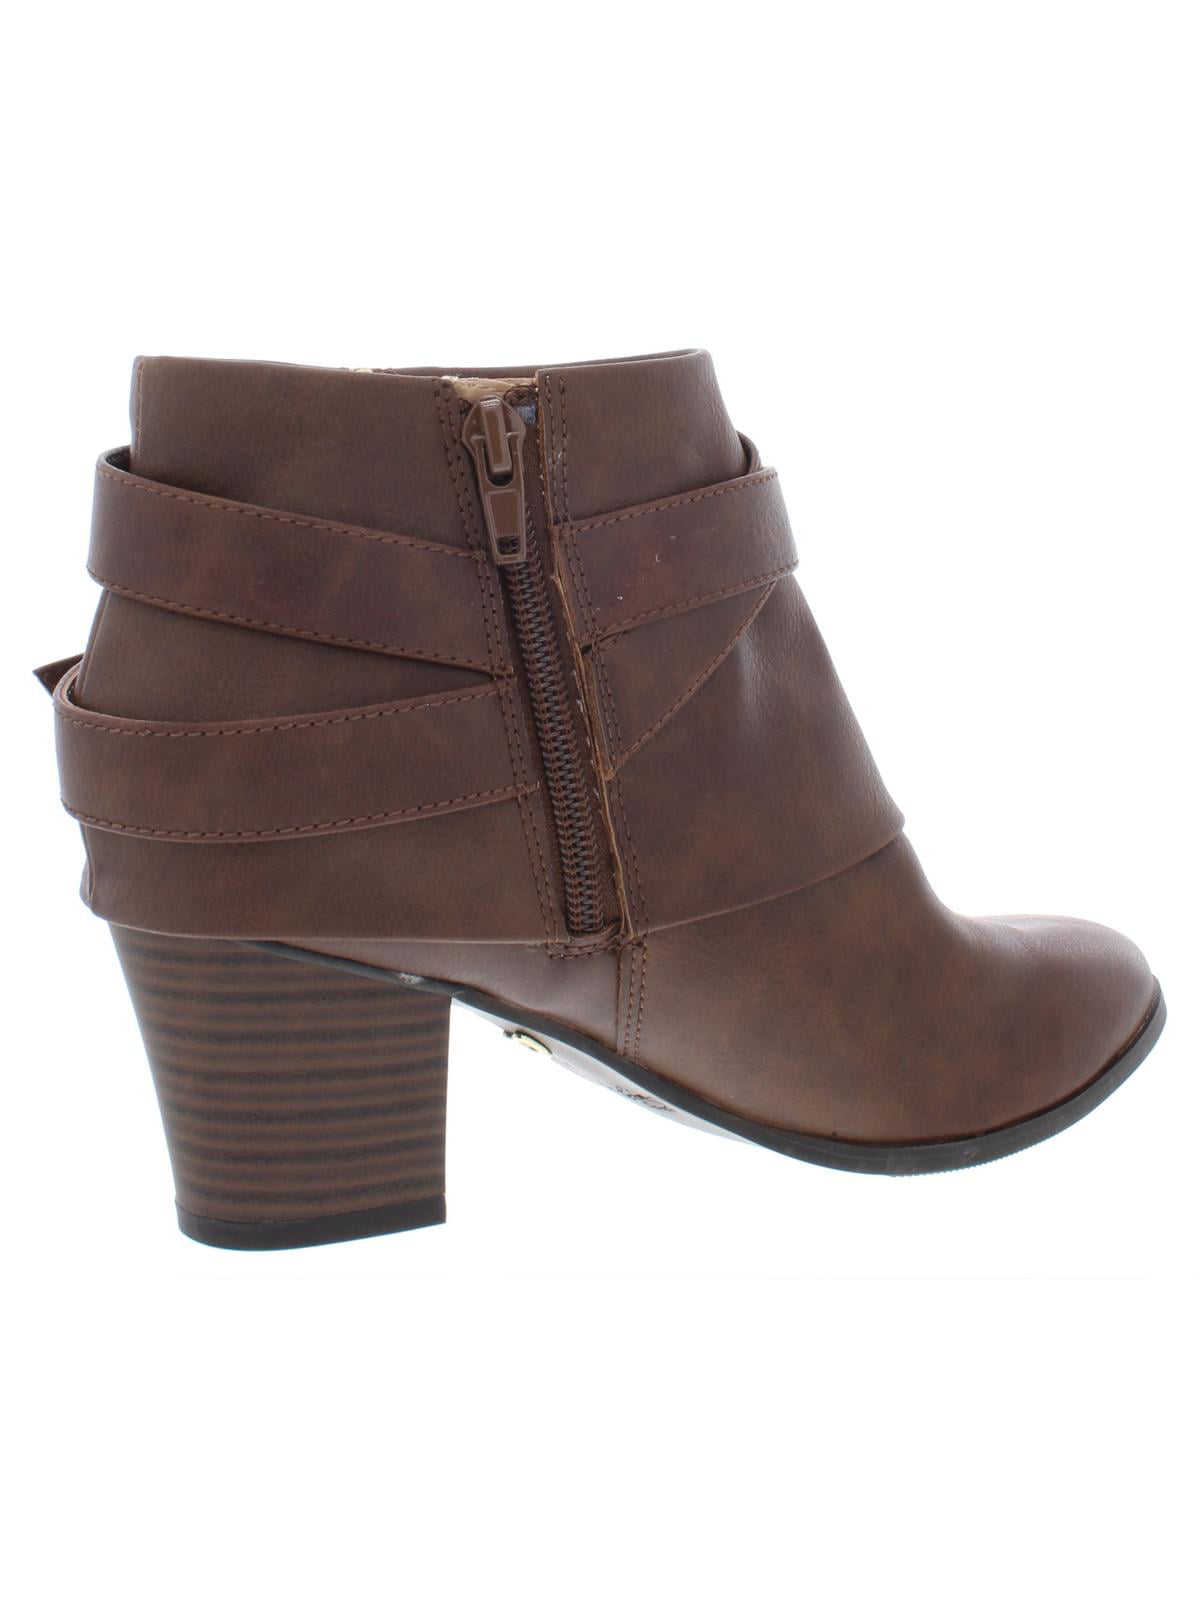 Brown Size 11.0 Thalia Sodi Womens Tully Round Toe Ankle Fashion Boots 